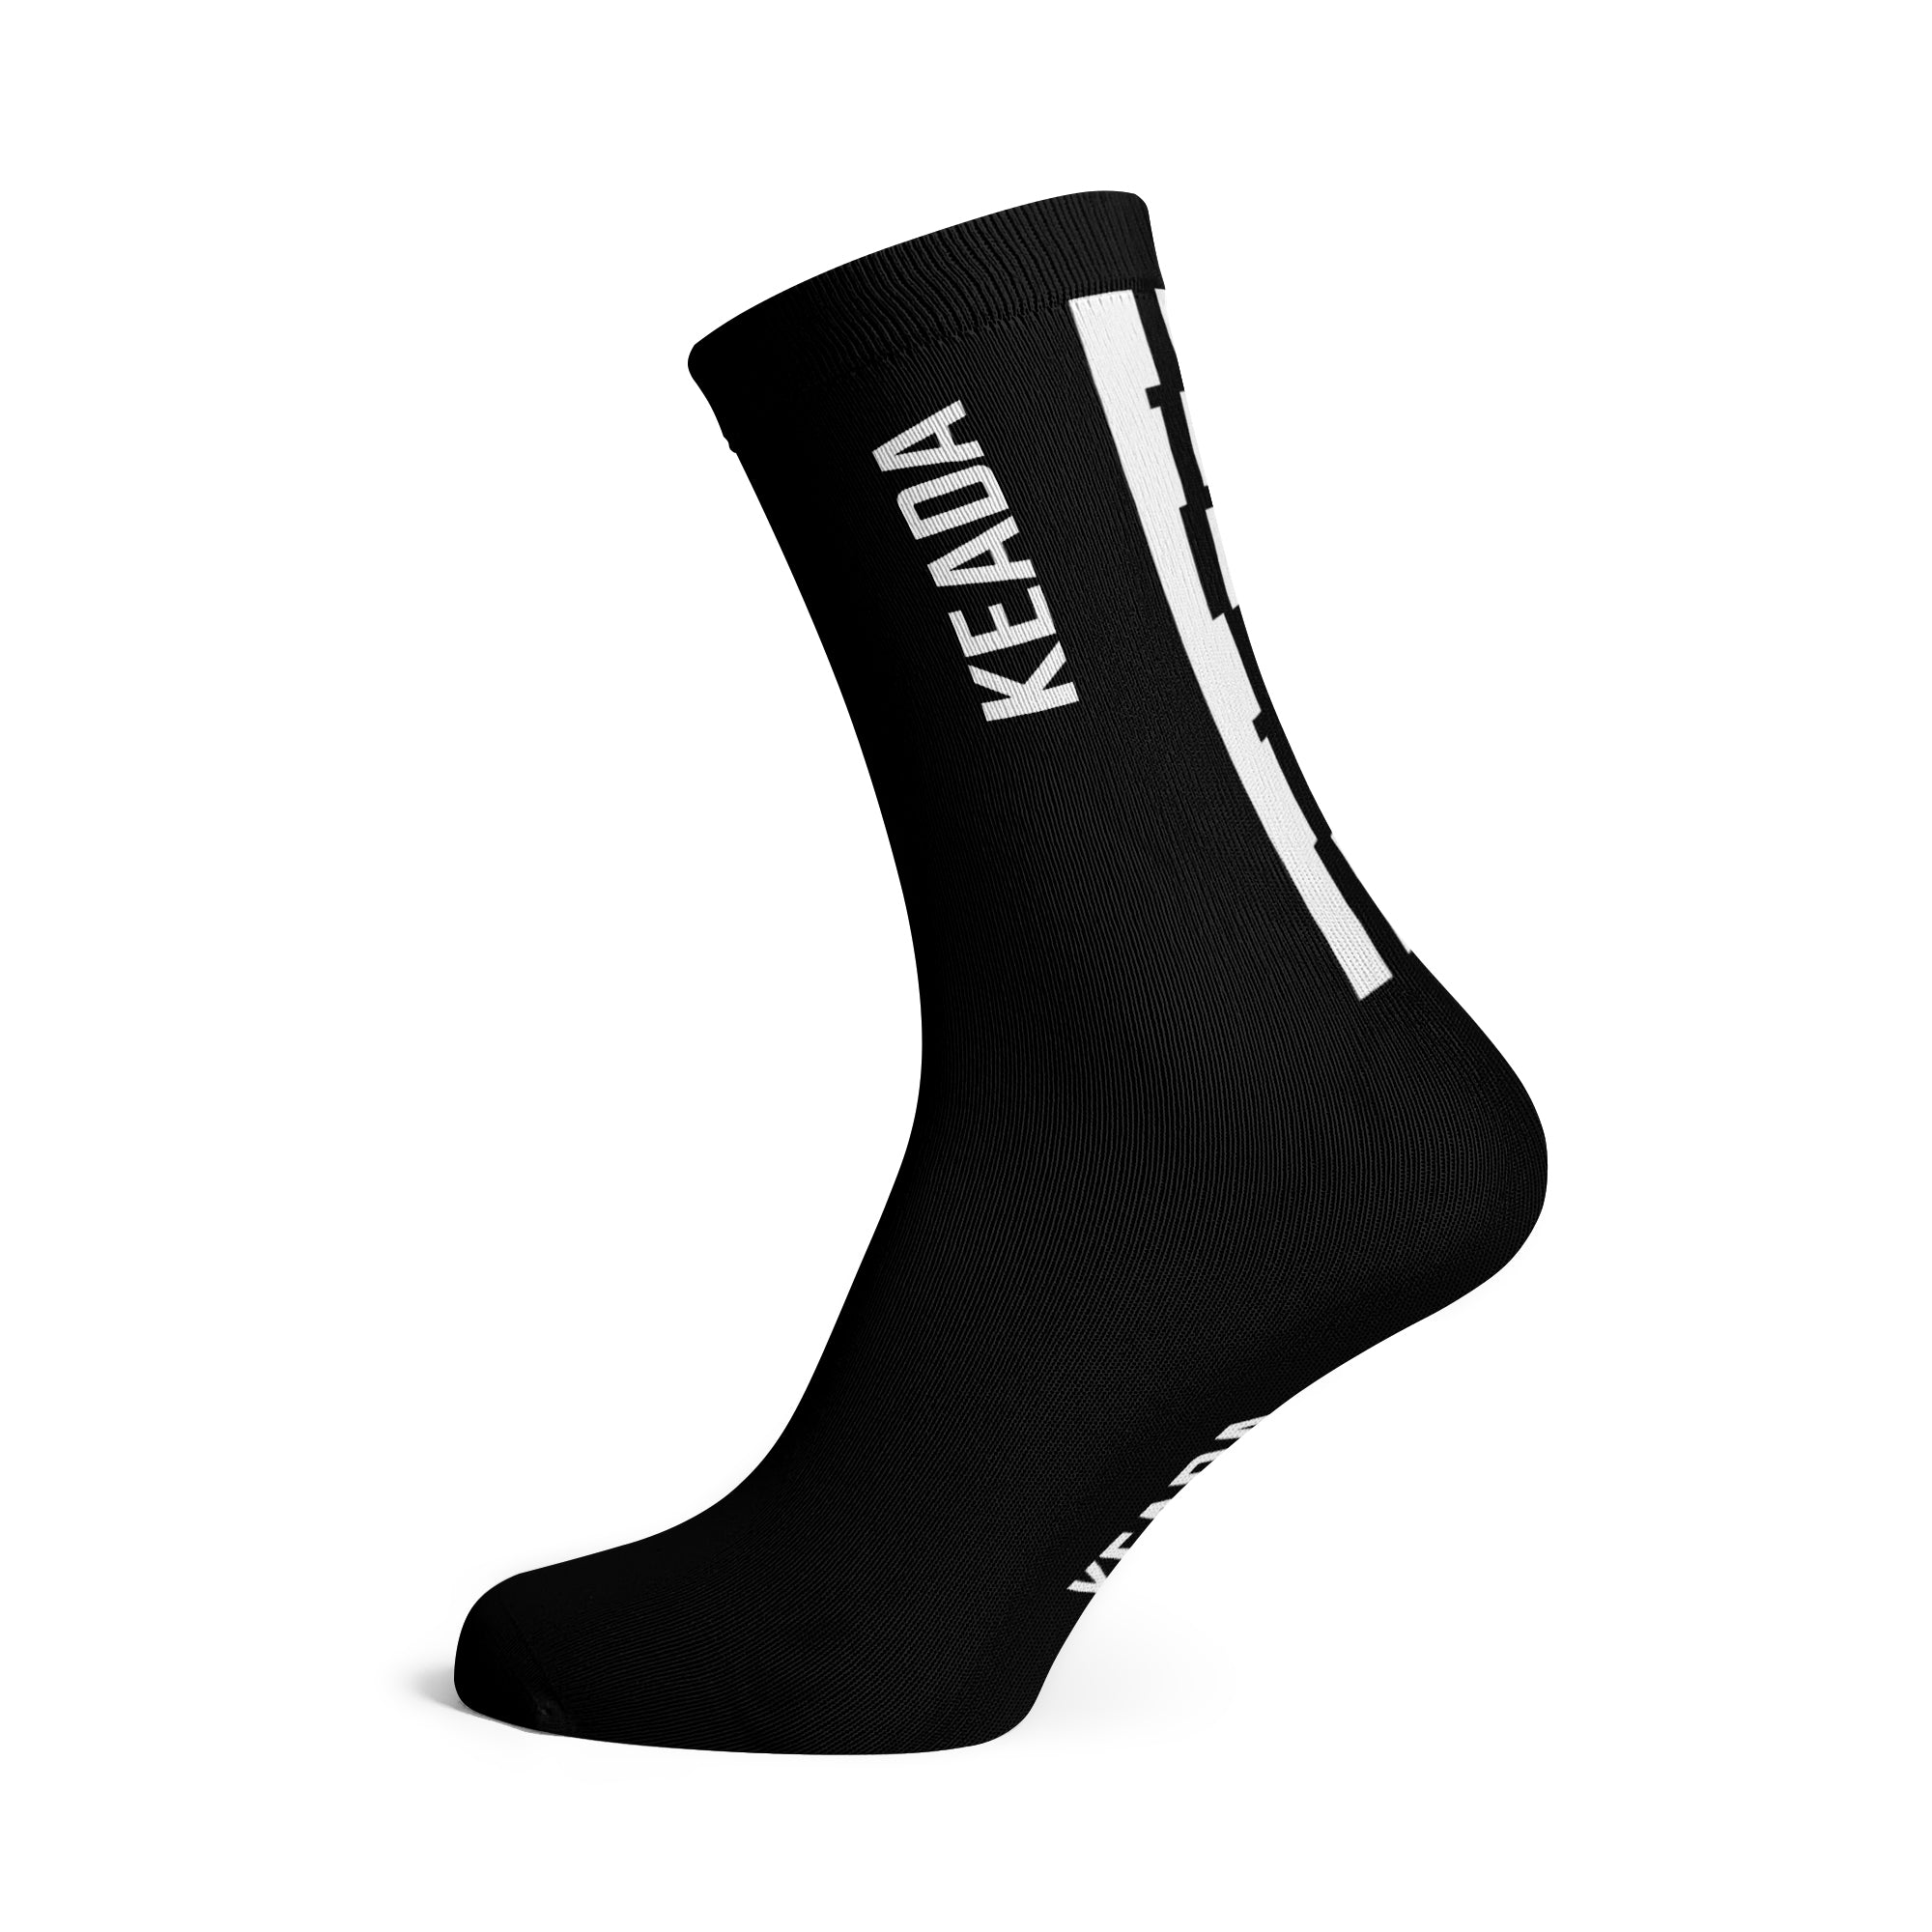 Essential Cycling Socks - Black